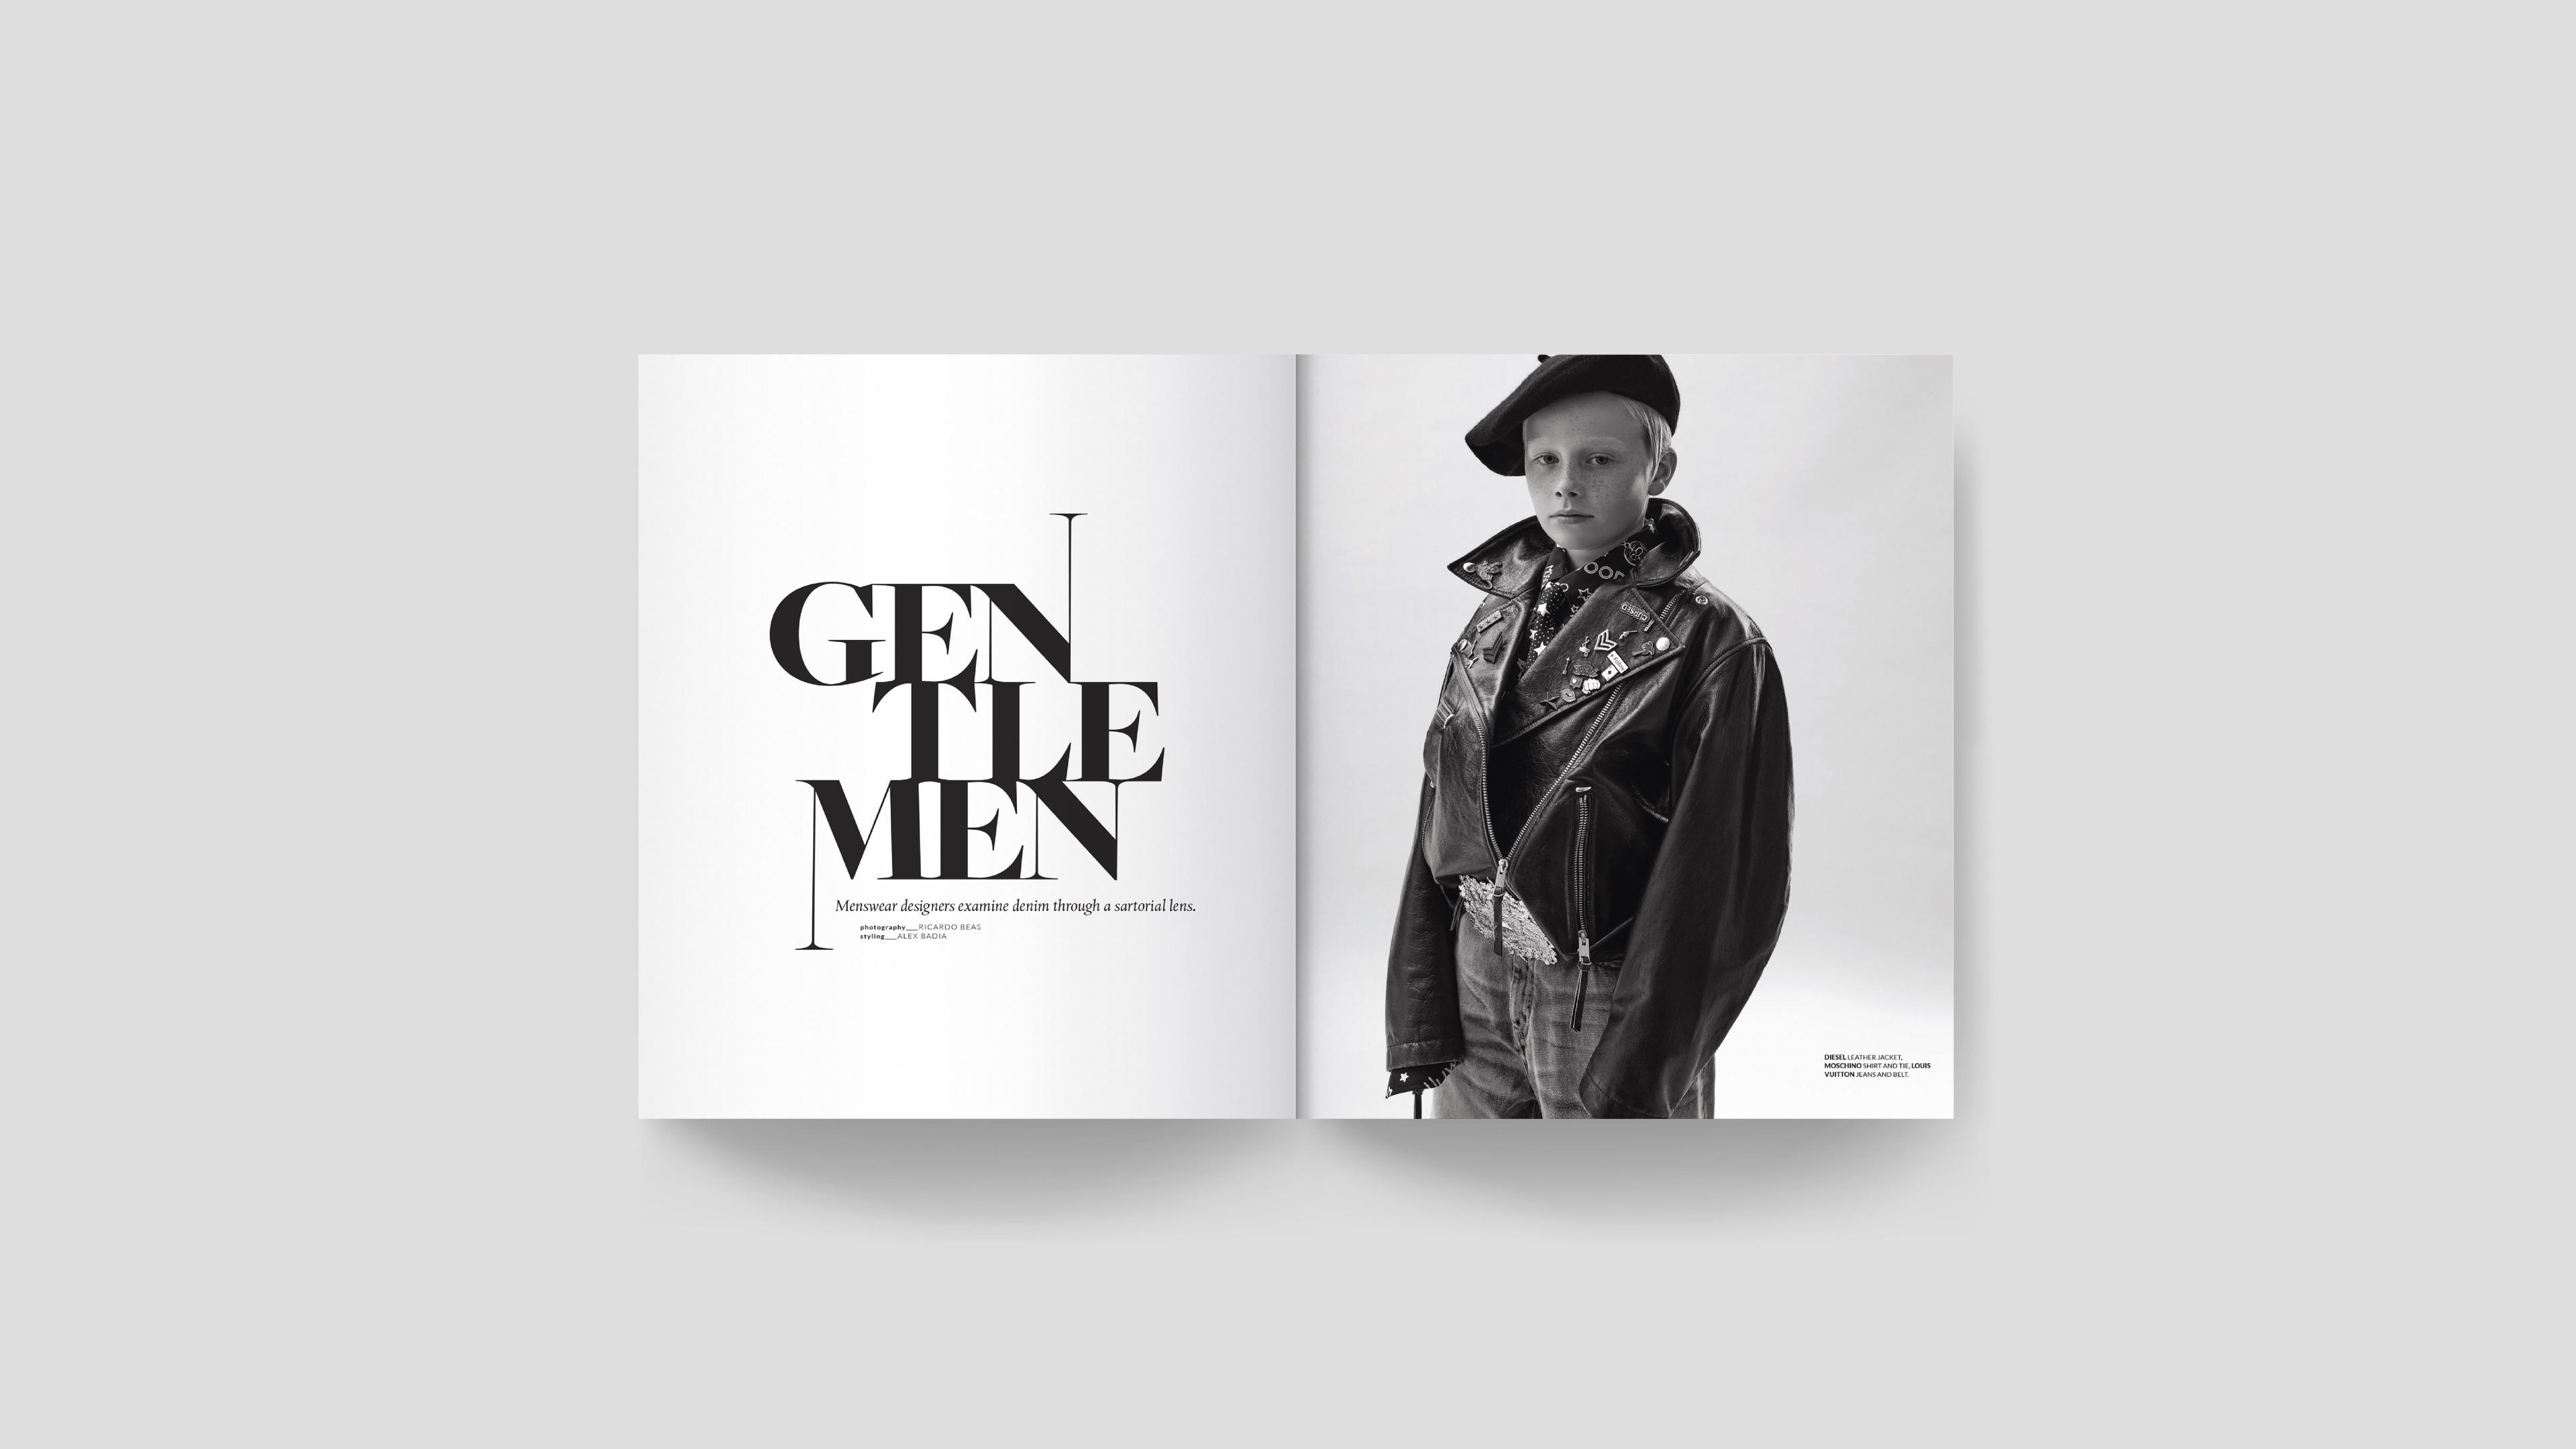 Fashion spread called "Gentlemen" on a grey background